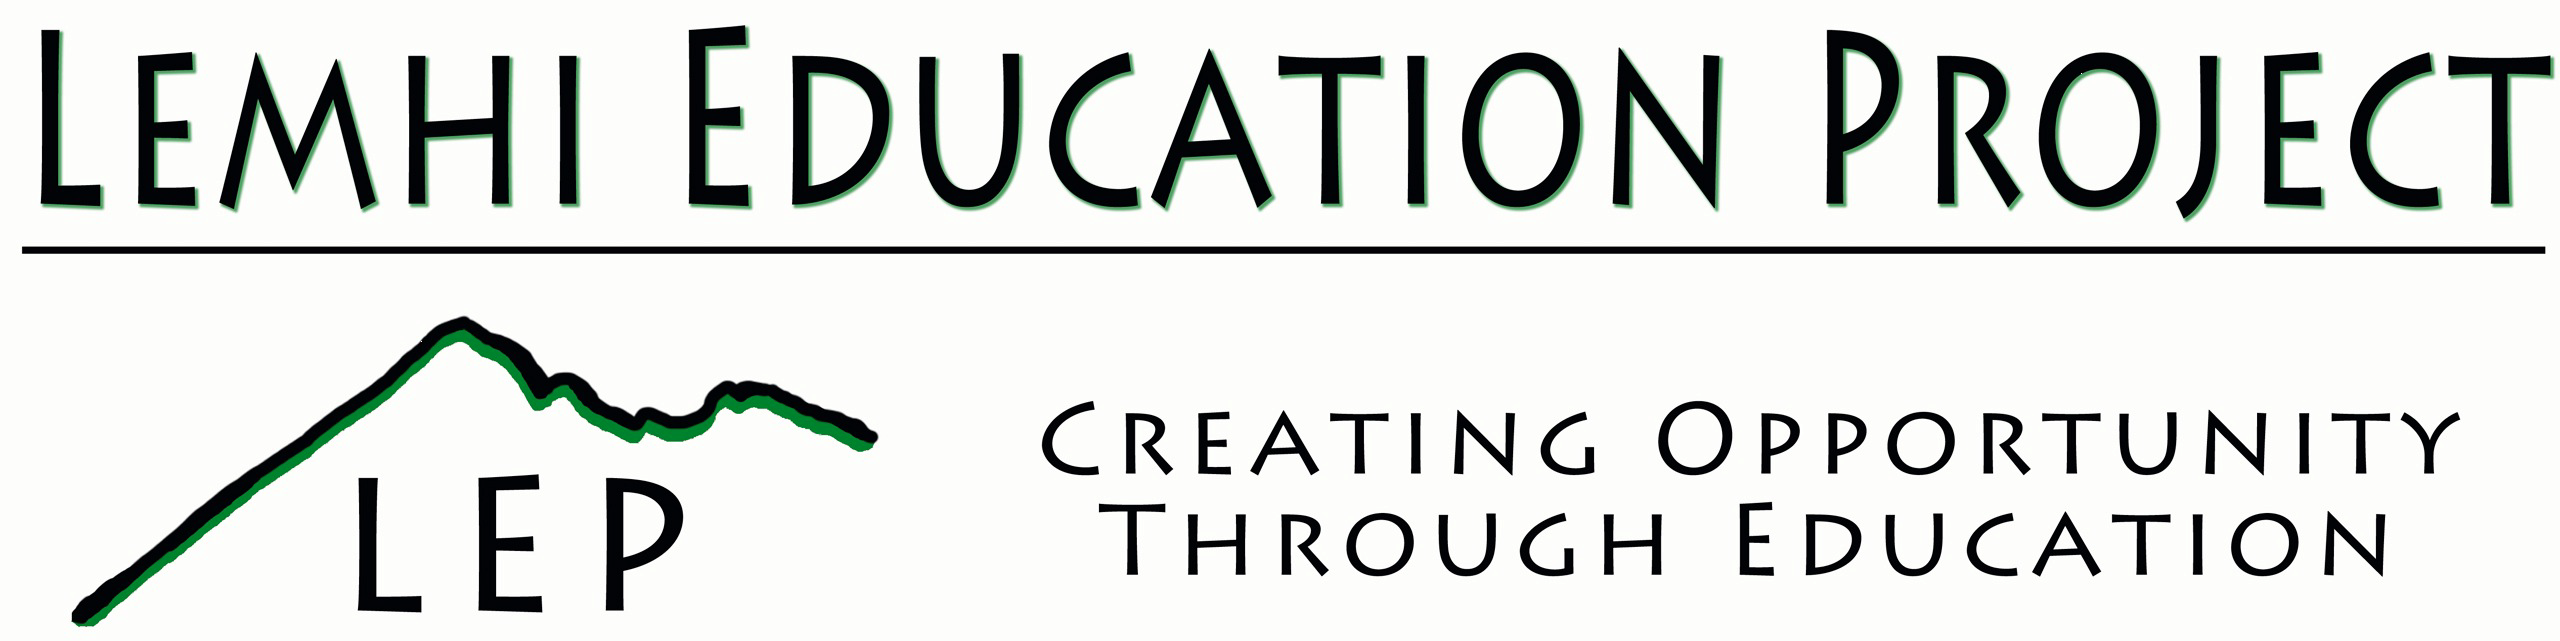 Lemhi Education Project logo